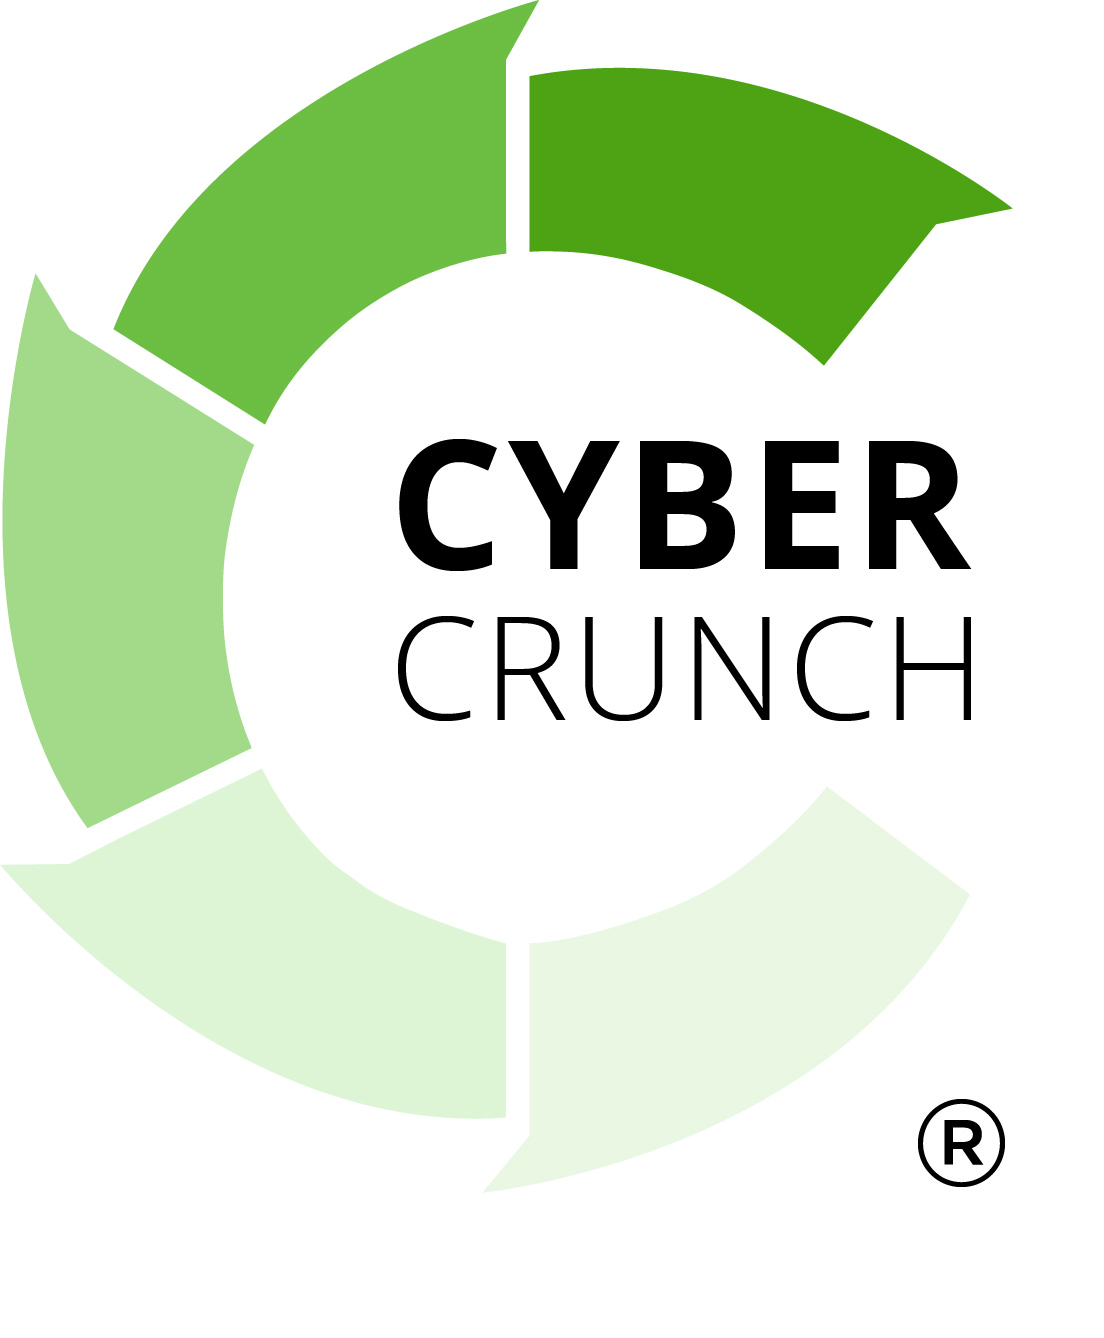 CyberCrunch recycling & hard drive shredding